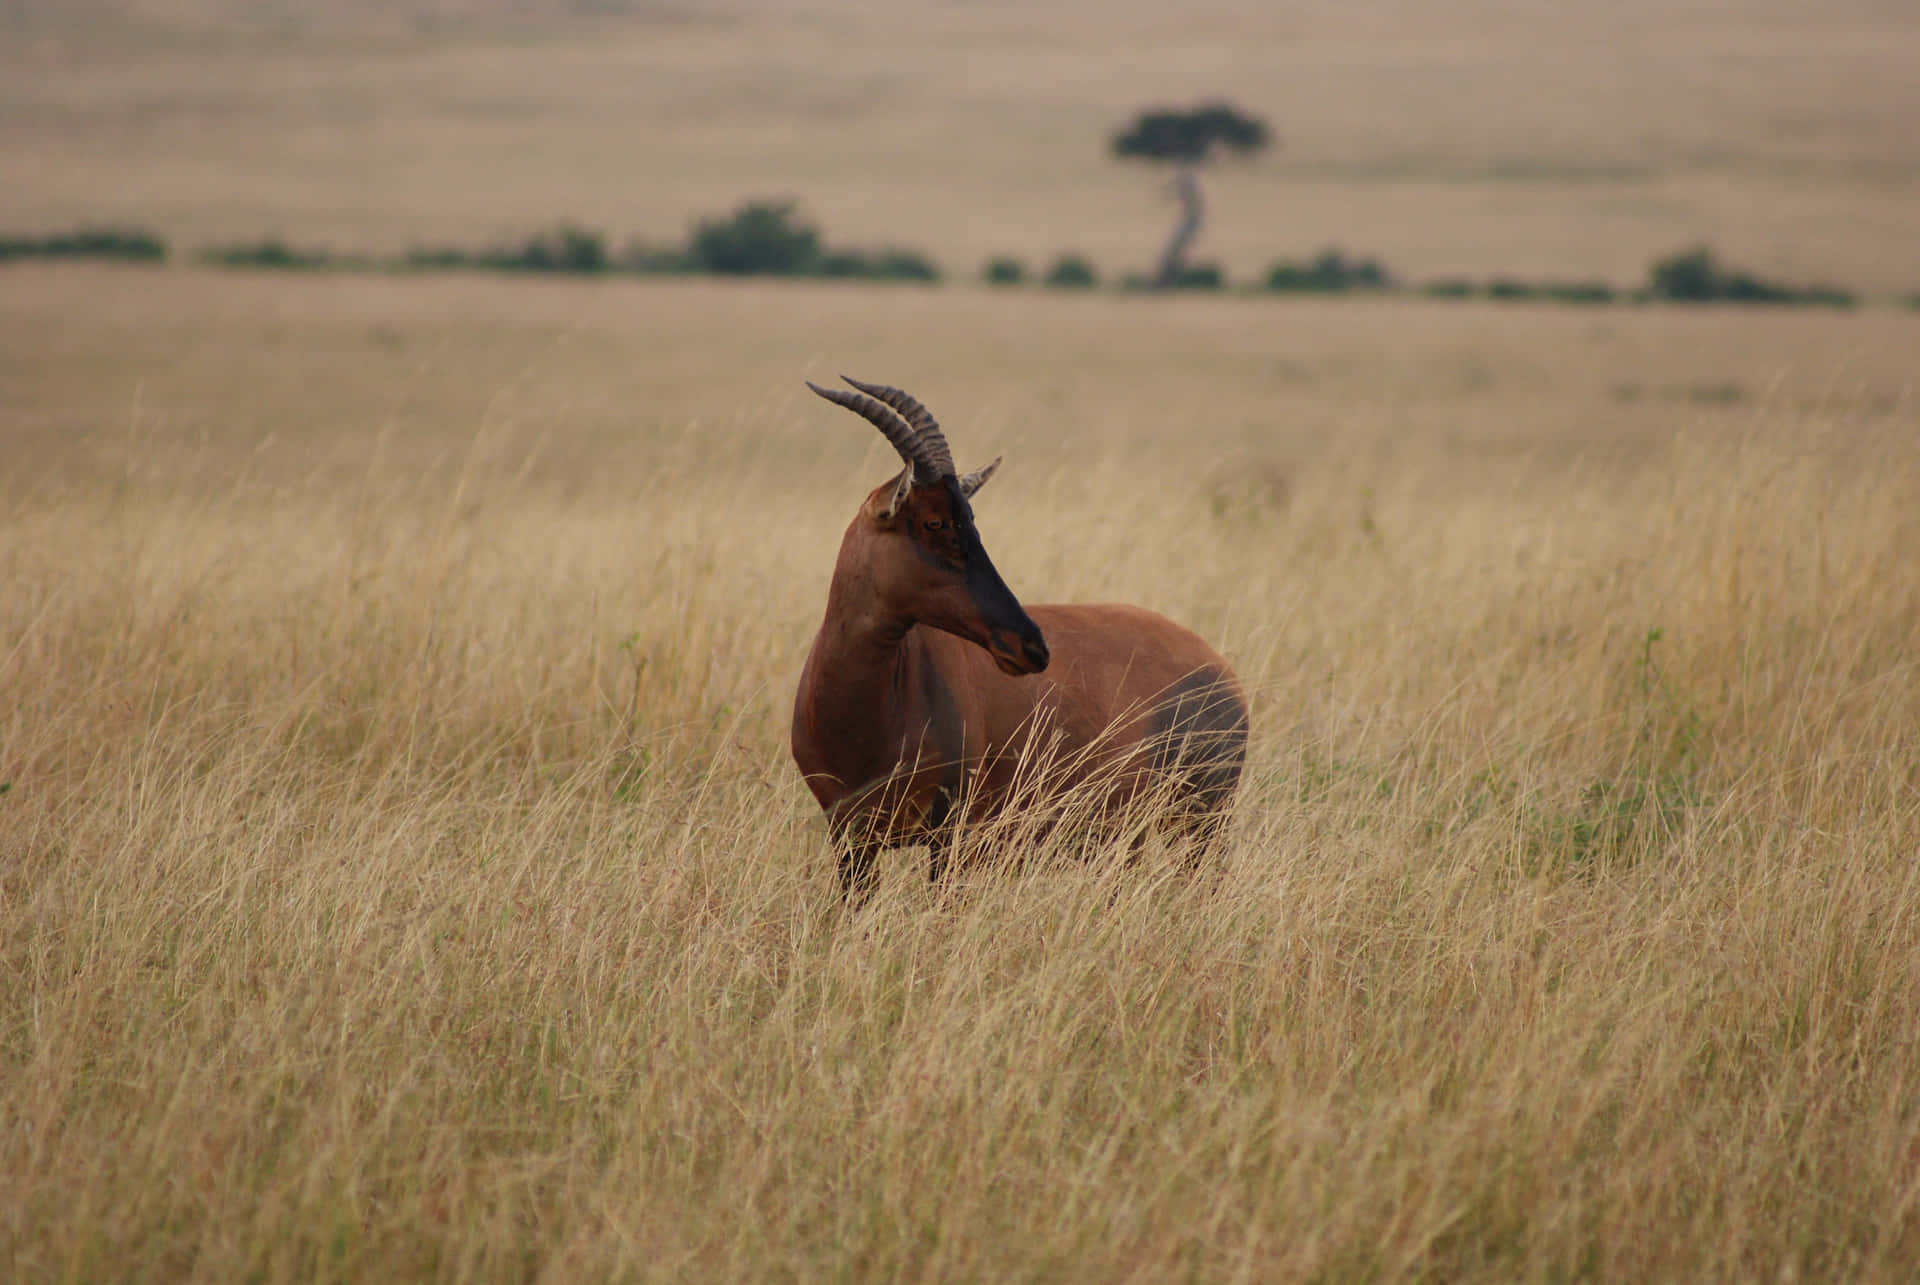 Topi Antelopein Savanna Grasslands.jpg Wallpaper